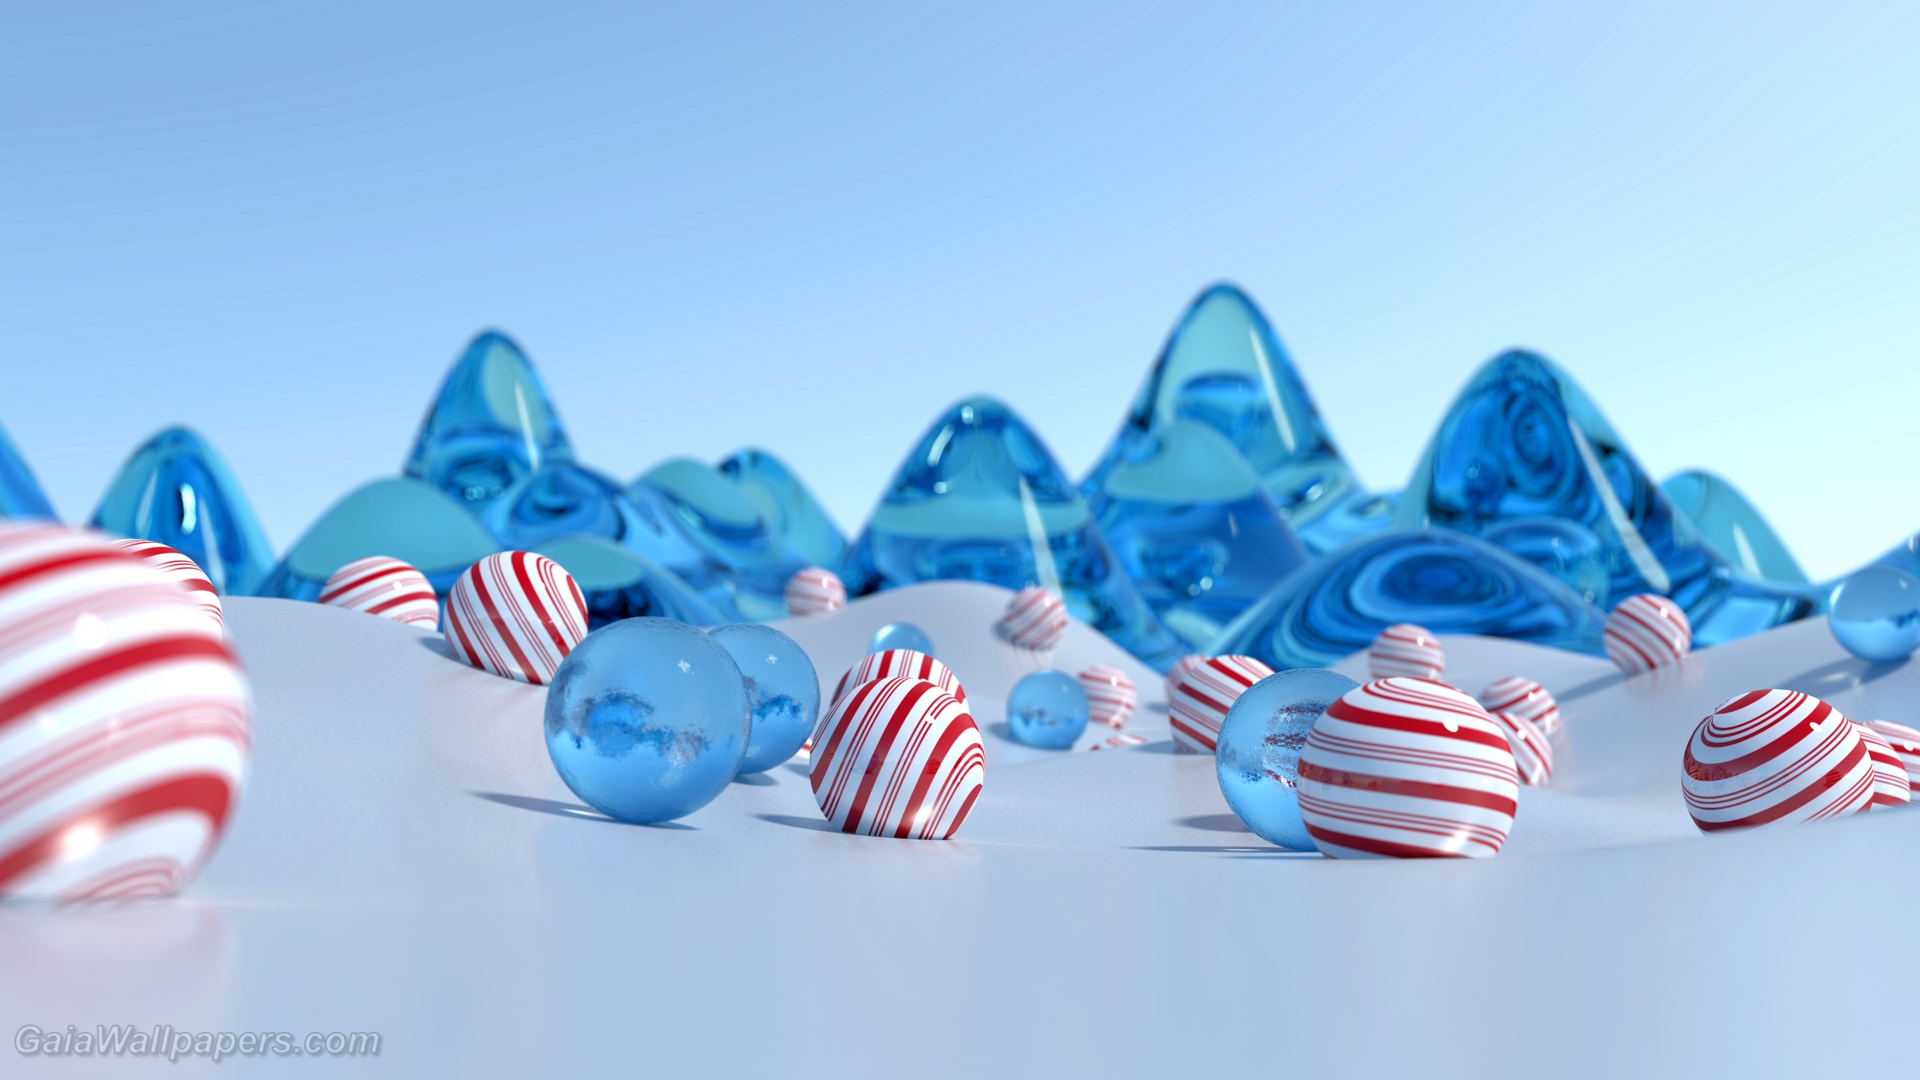 Perles de bonbons dans la terre glacée - Fonds d'écran gratuits